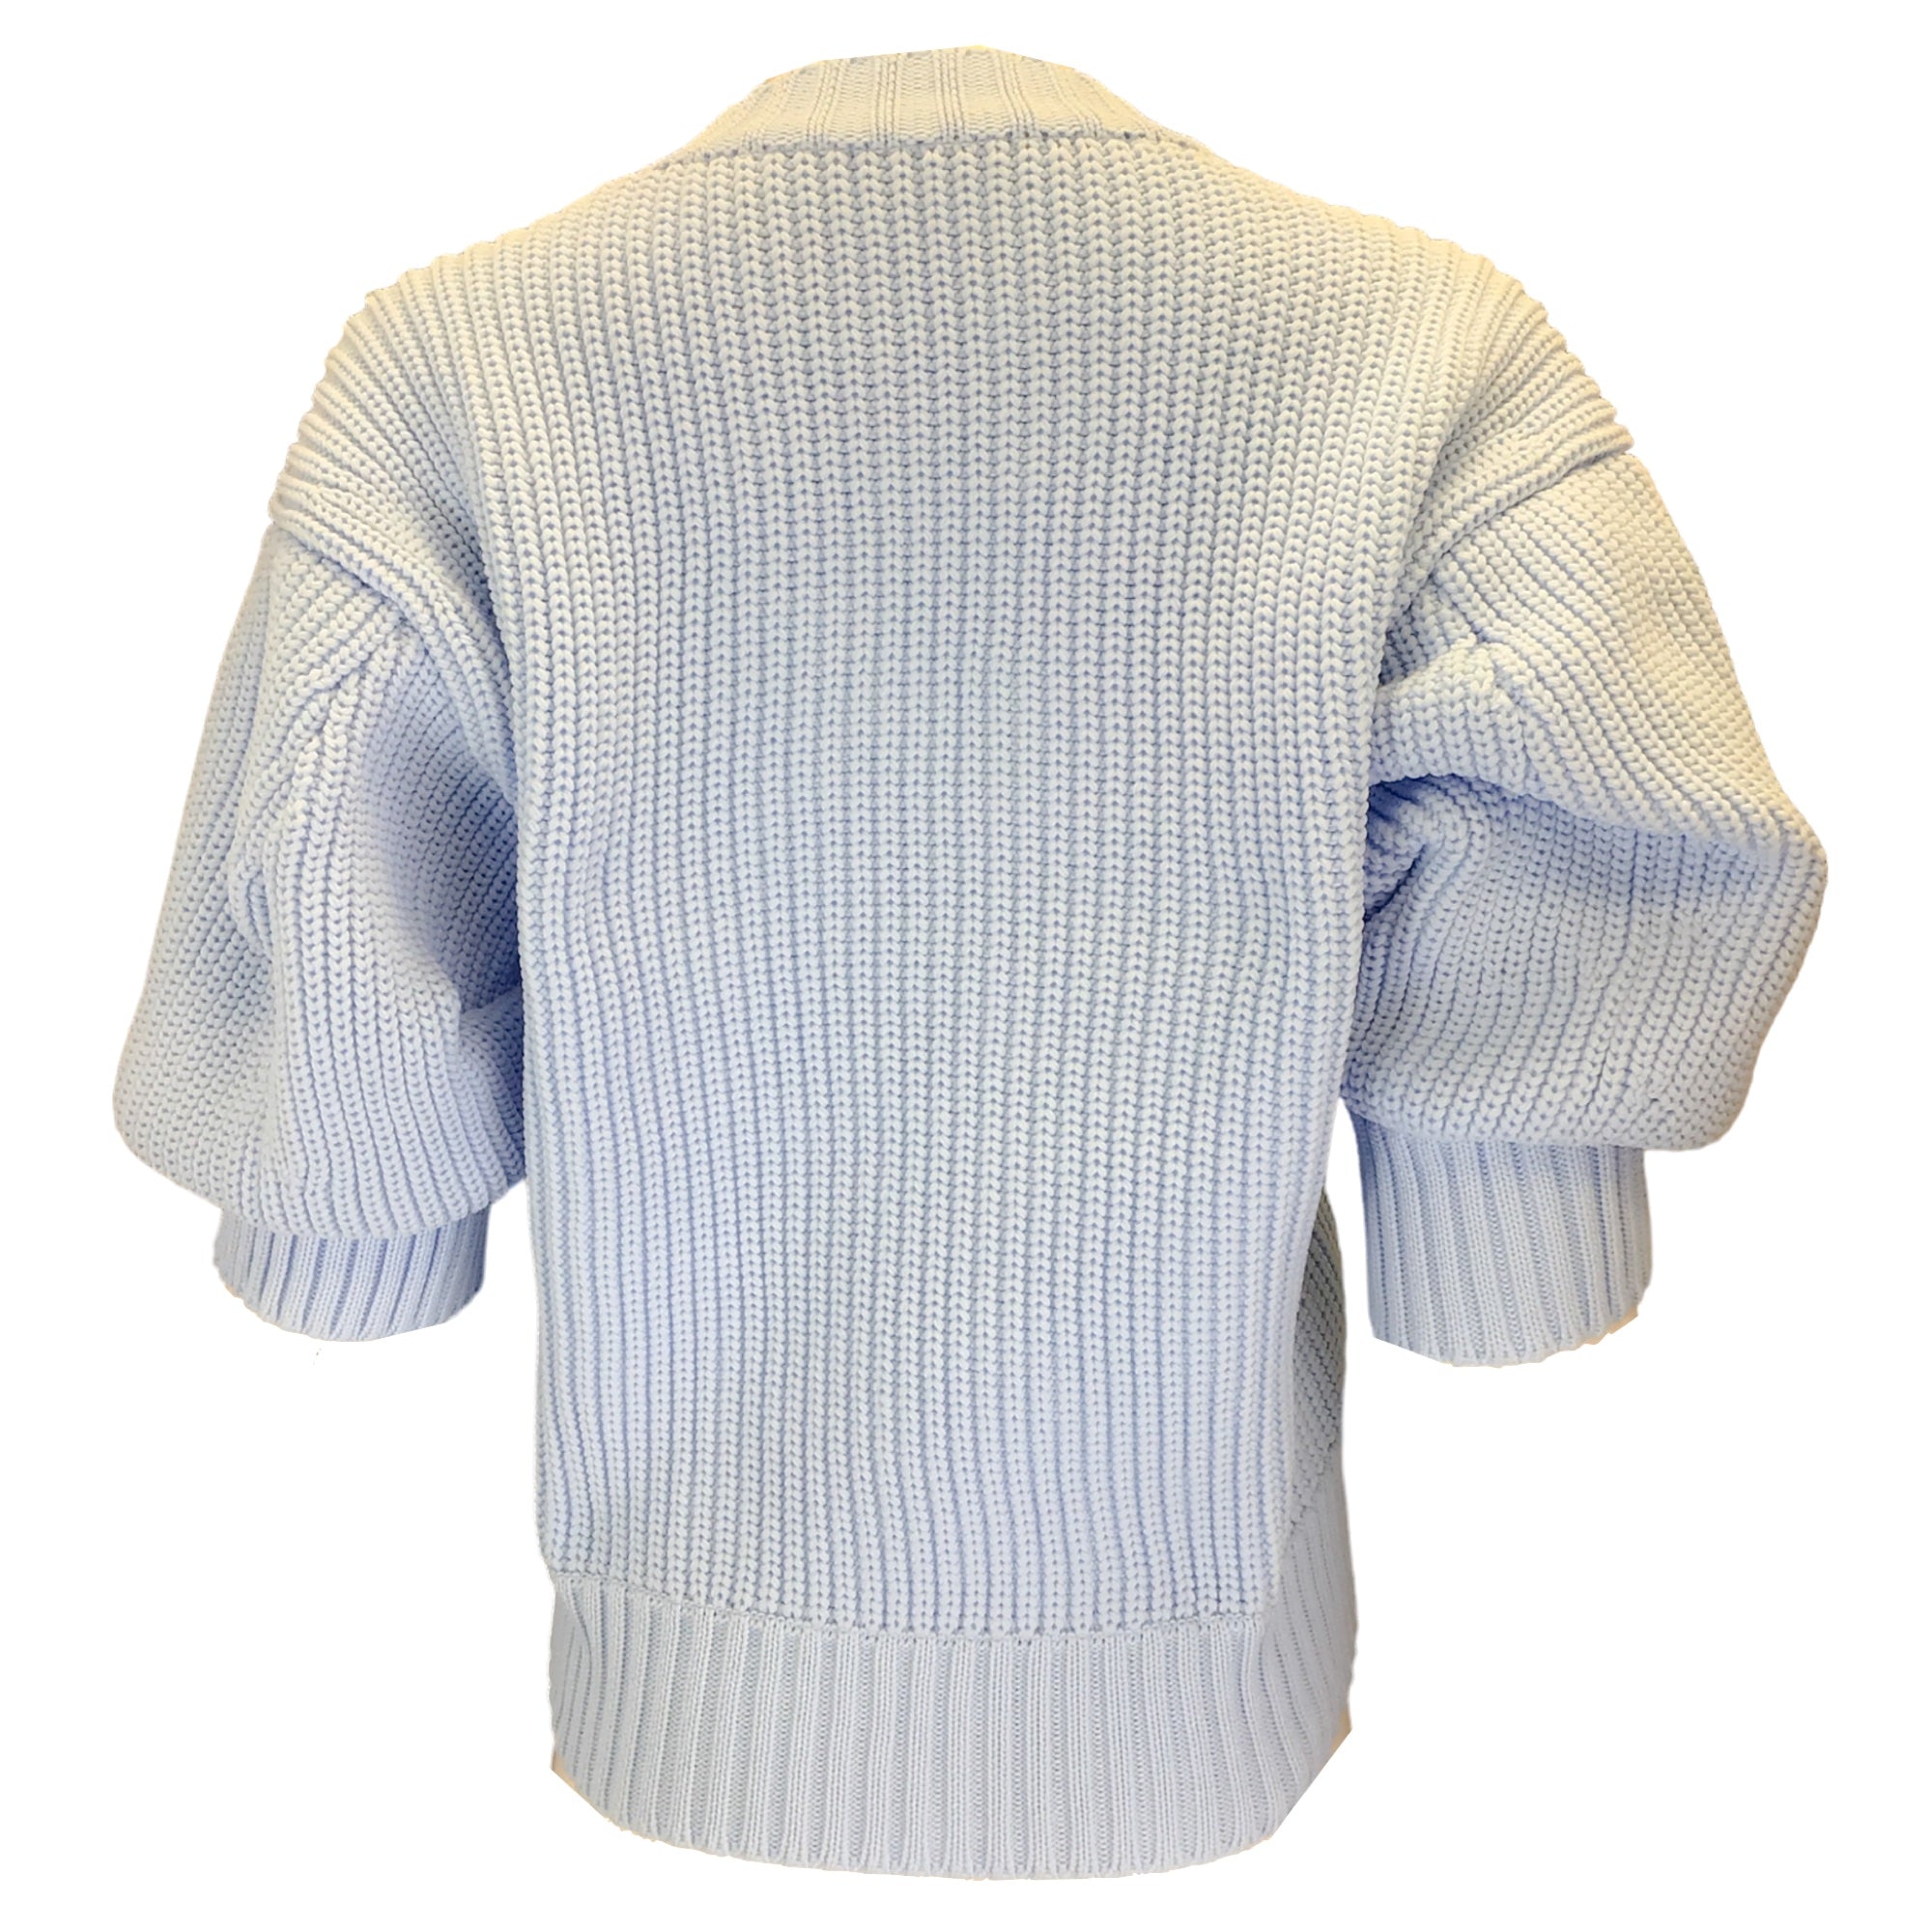 Sacai Light Blue Short Puff Sleeved Knit Pullover Sweater